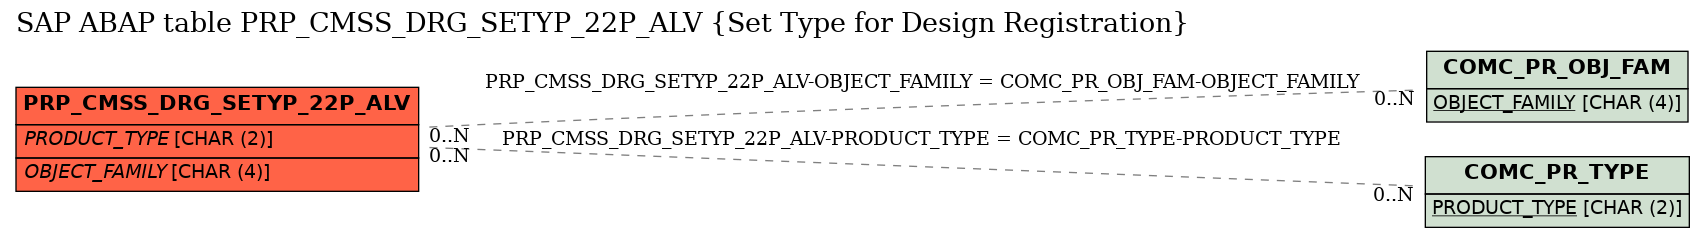 E-R Diagram for table PRP_CMSS_DRG_SETYP_22P_ALV (Set Type for Design Registration)